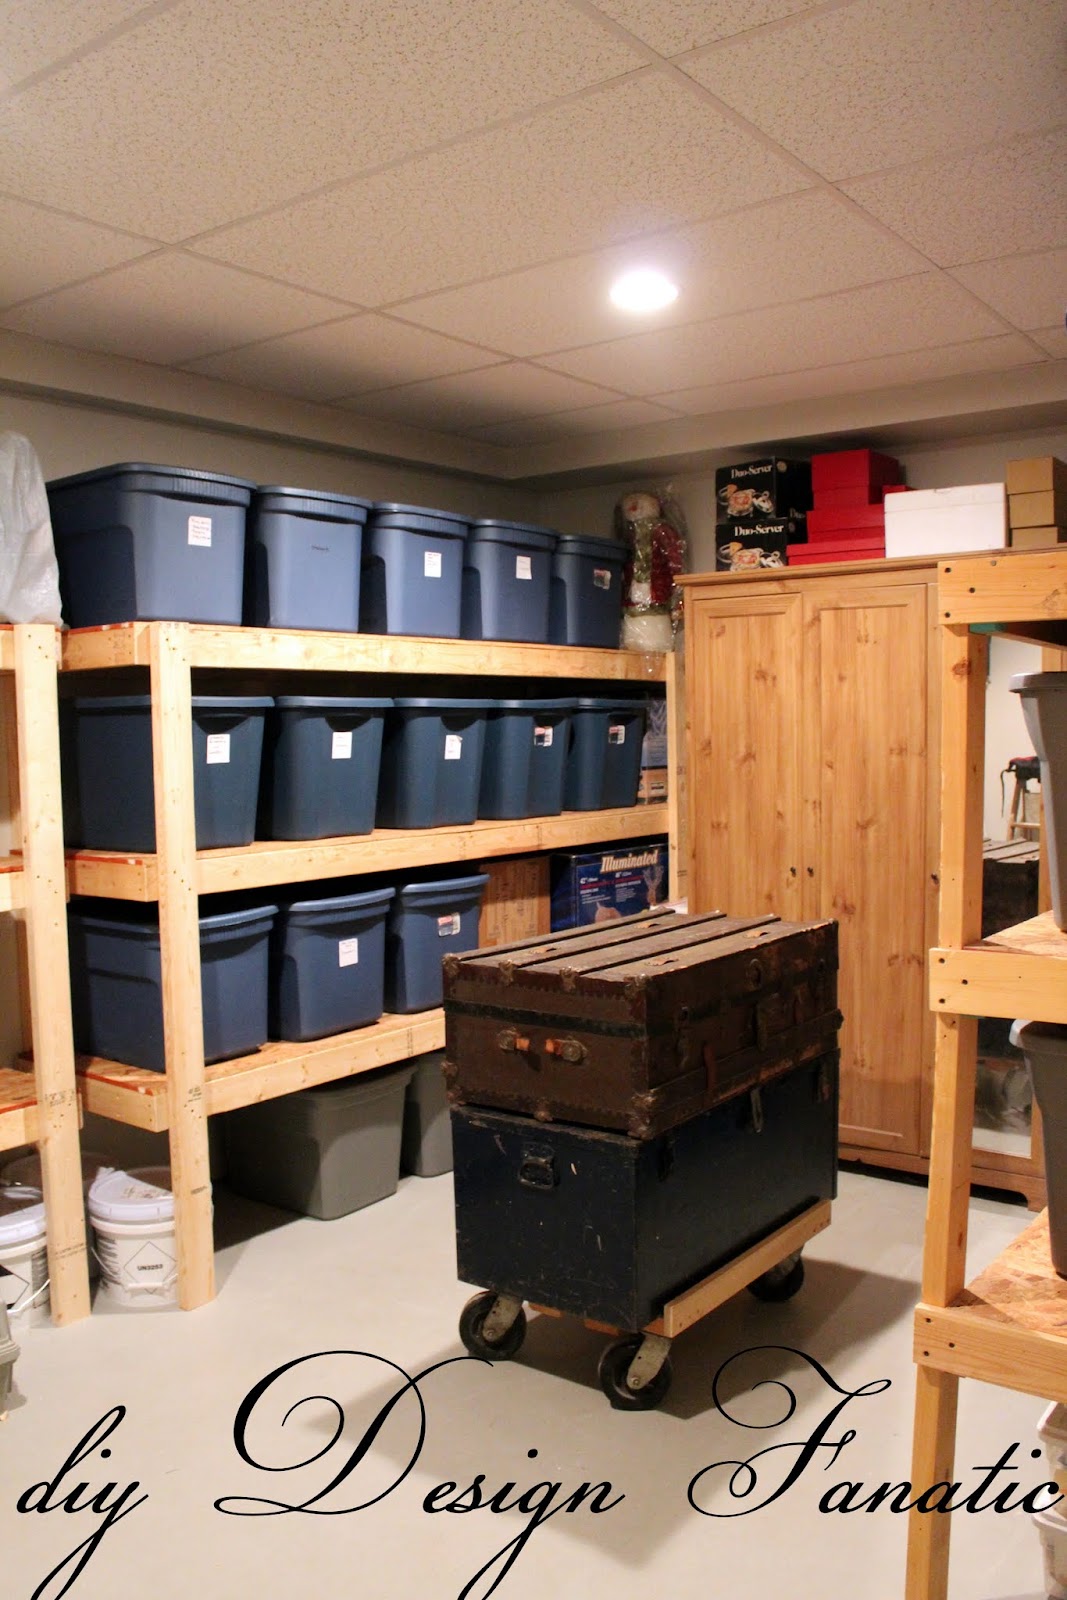 storage shelves